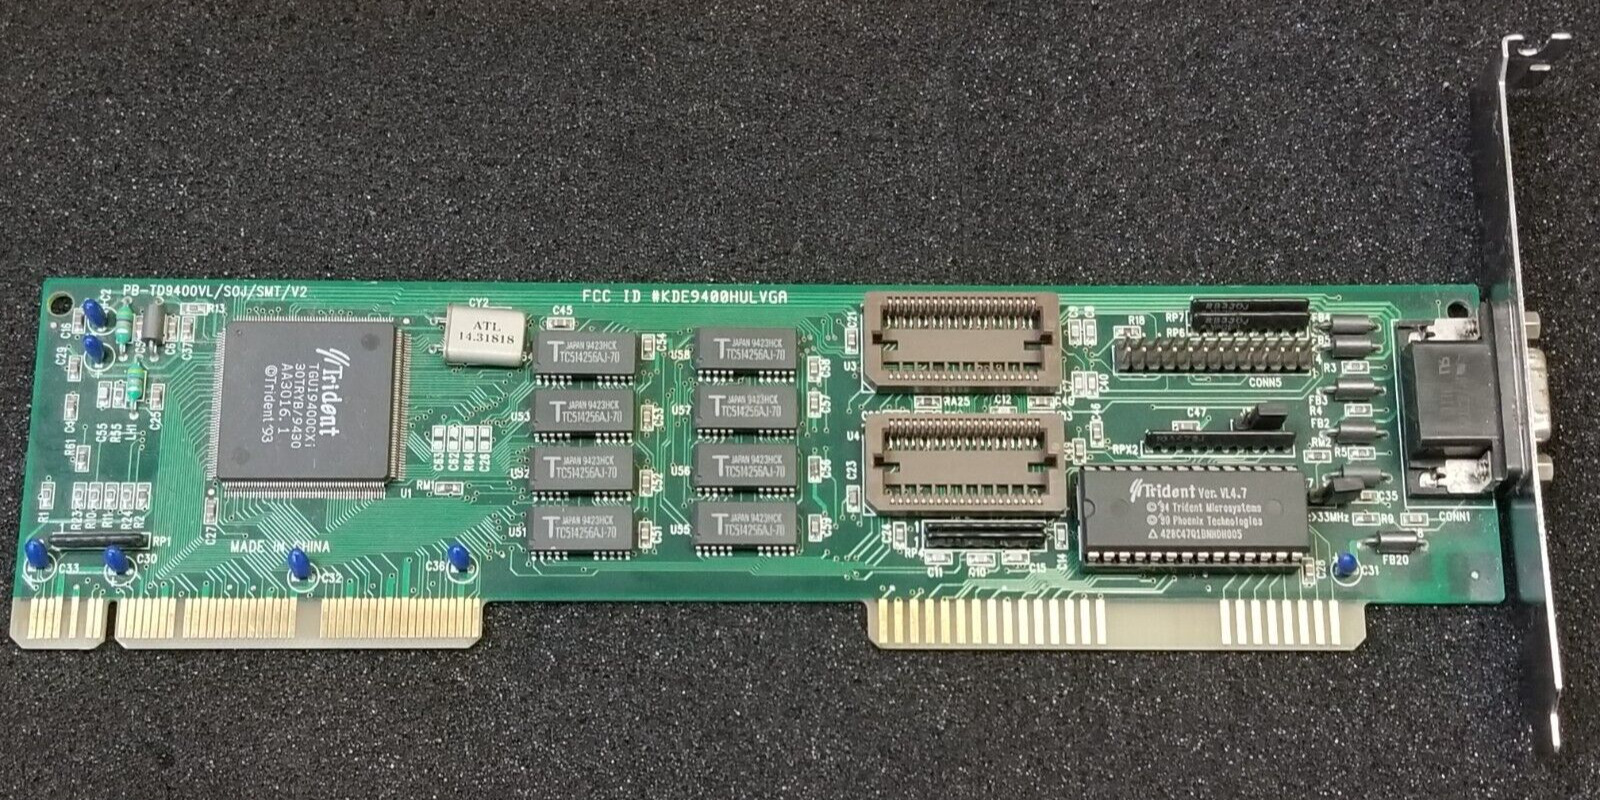 Trident TGUi9400CXi 1MB LVB VGA Video Card GPU for DOS retro Gaming #L1B